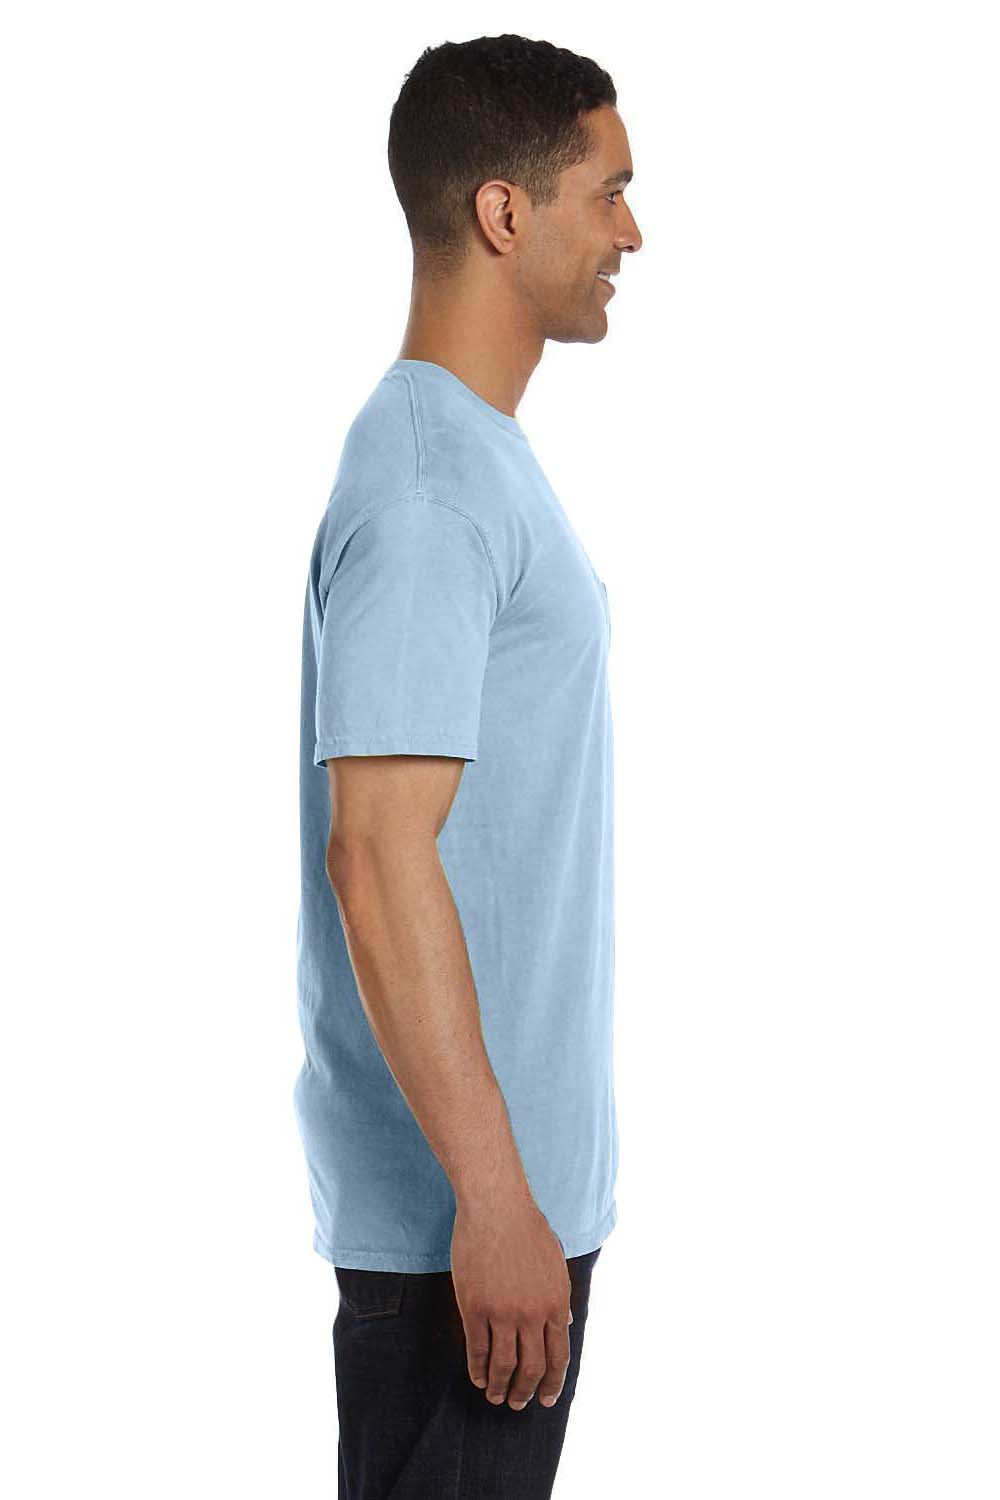 Comfort Colors 6030CC Mens Short Sleeve Crewneck T-Shirt w/ Pocket Ice Blue Side